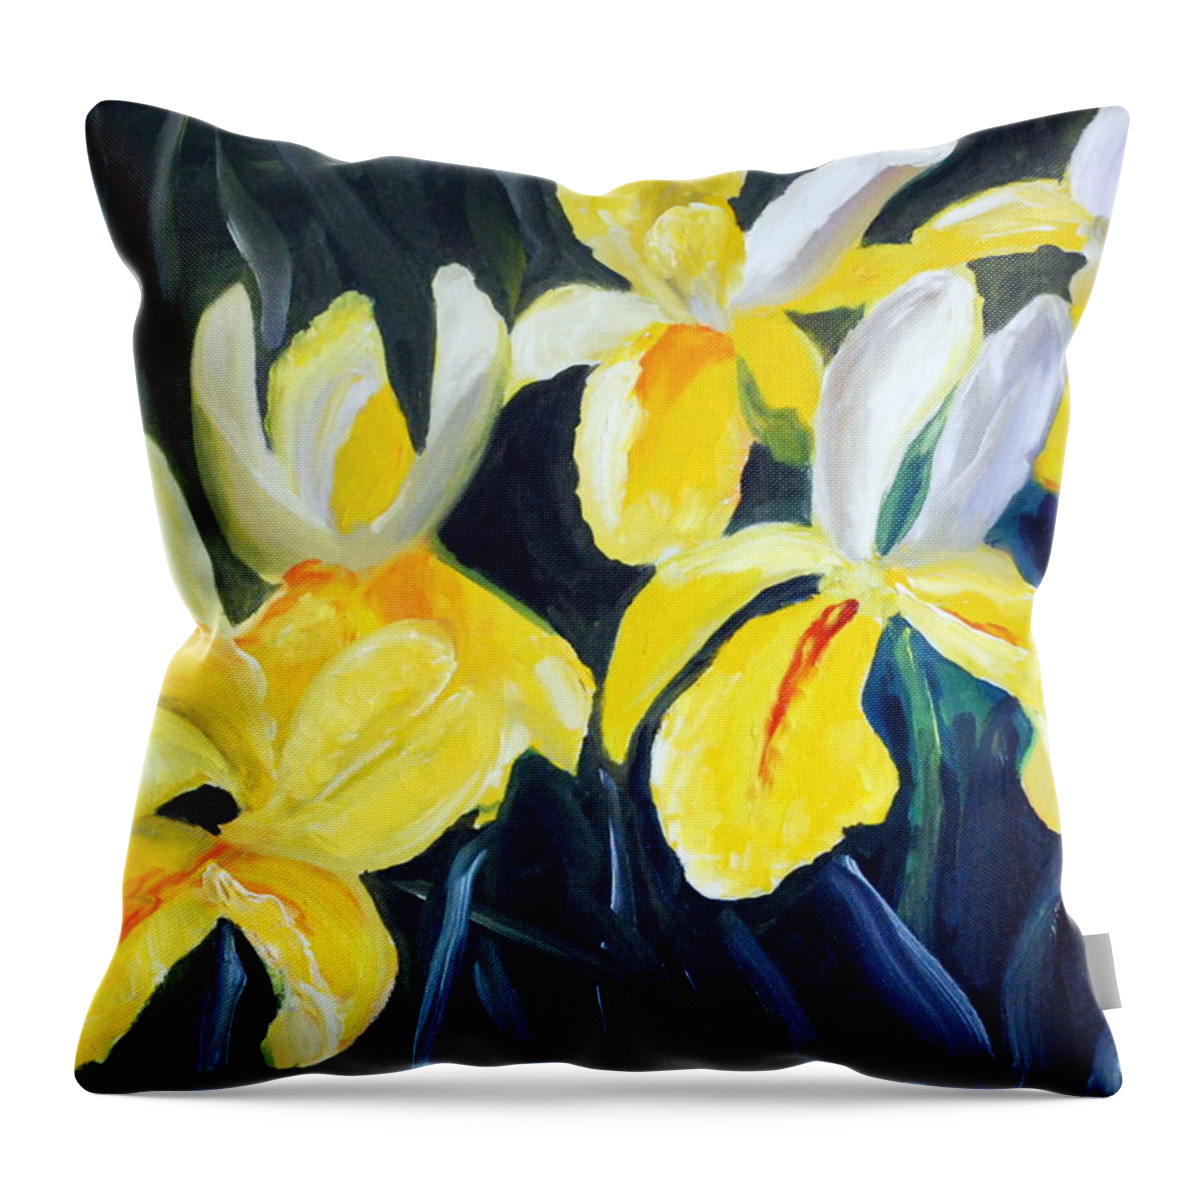 Irisis Throw Pillow featuring the painting Irisis by Phil Burton